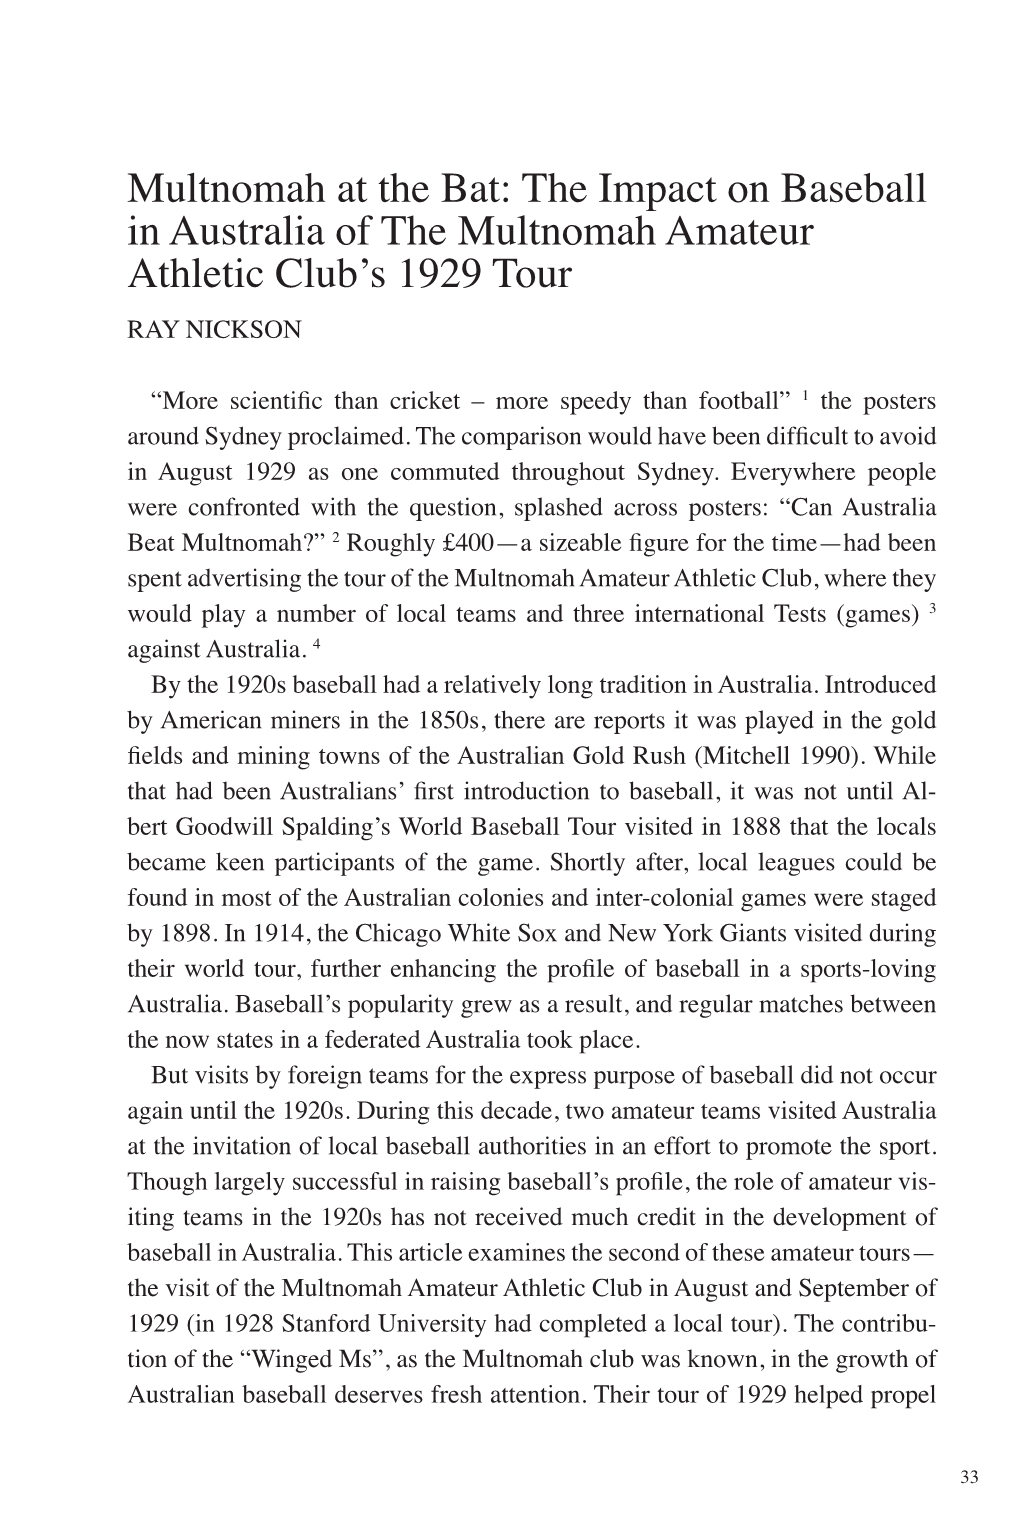 Multnomah at the Bat: the Impact on Baseball in Australia of the Multnomah Amateur Athletic Club’S 1929 Tour RAY NICKSON